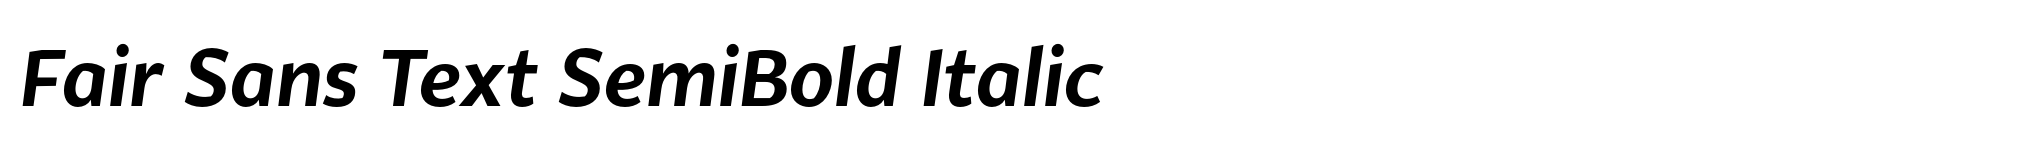 Fair Sans Text SemiBold Italic image